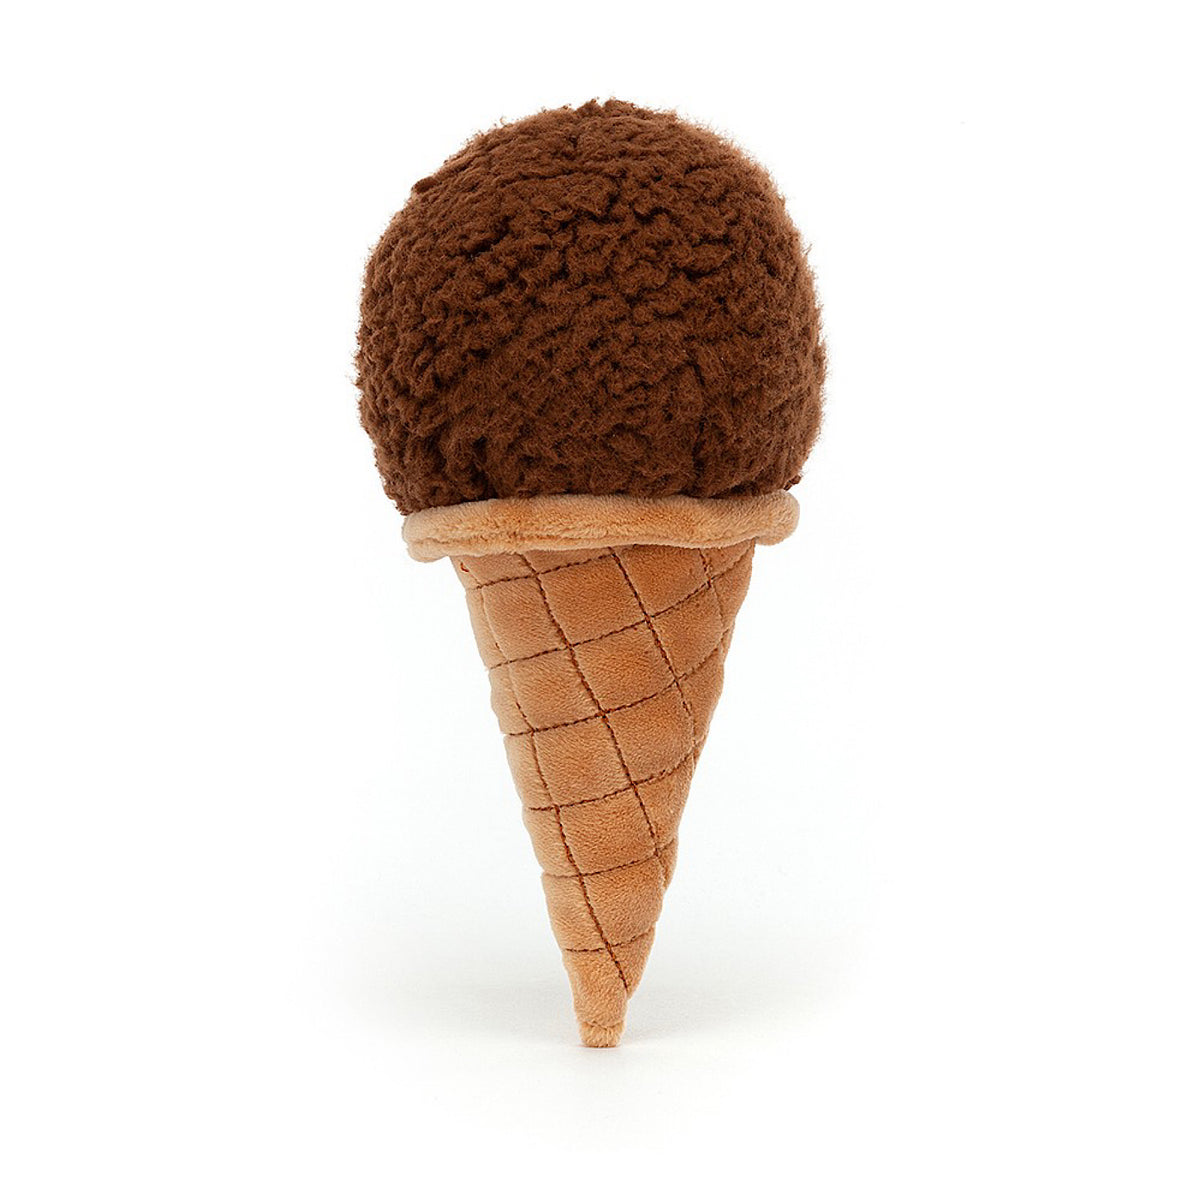 Irresistible Ice Cream, Chocolate